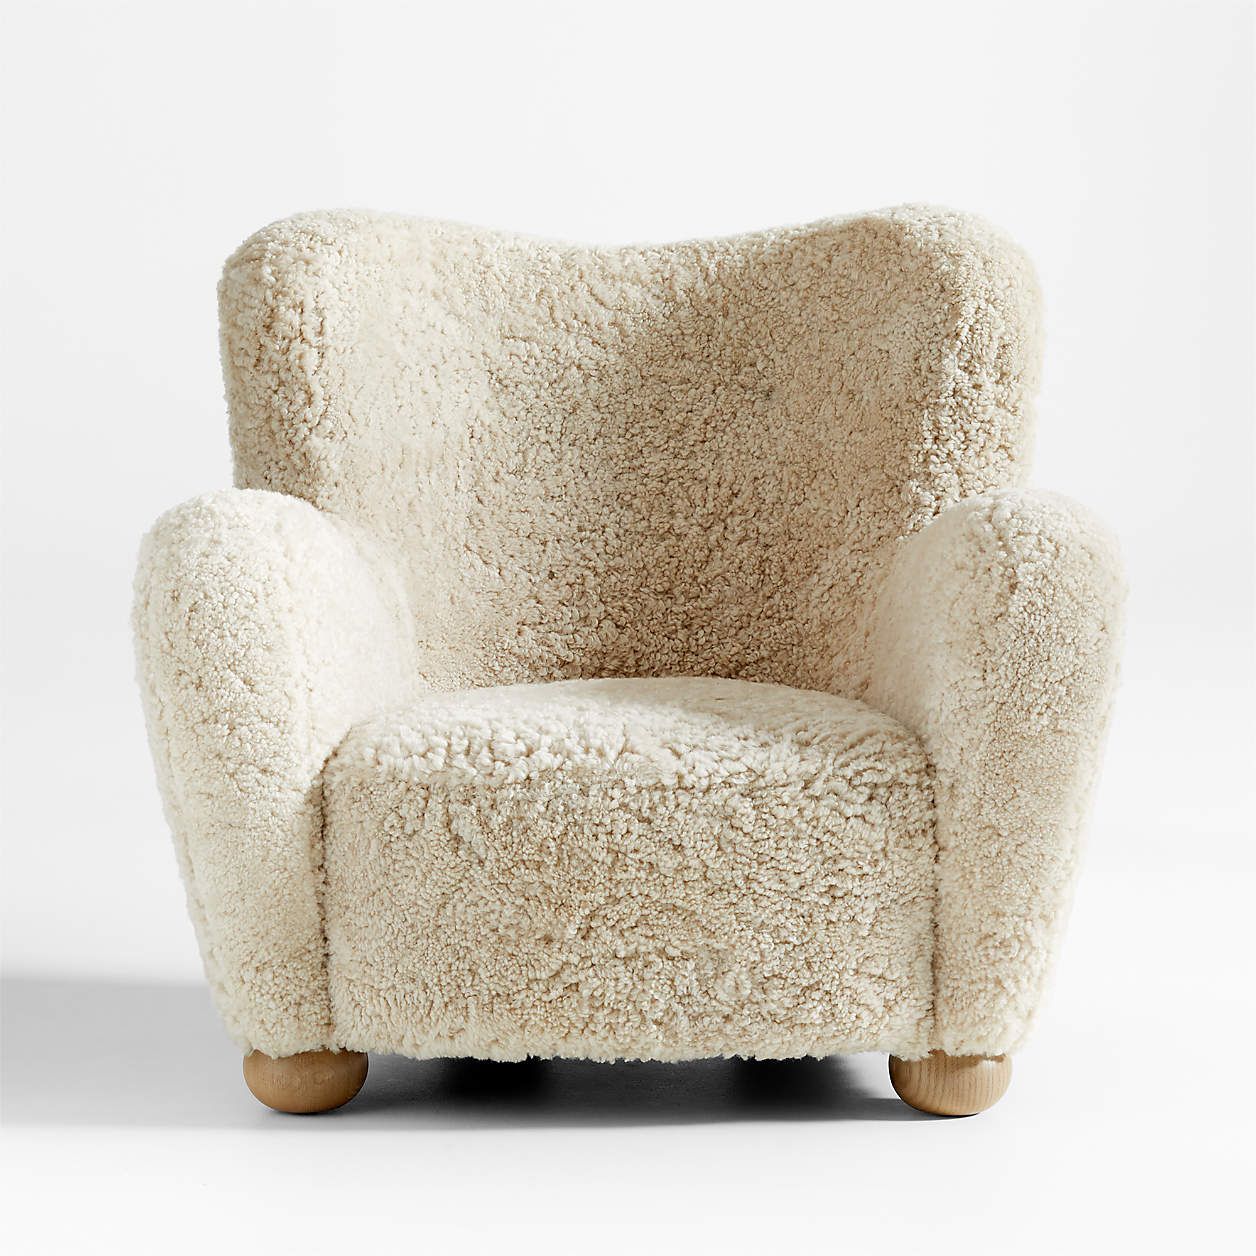 Le Tuco sheepskin side chair by Athena Calderone